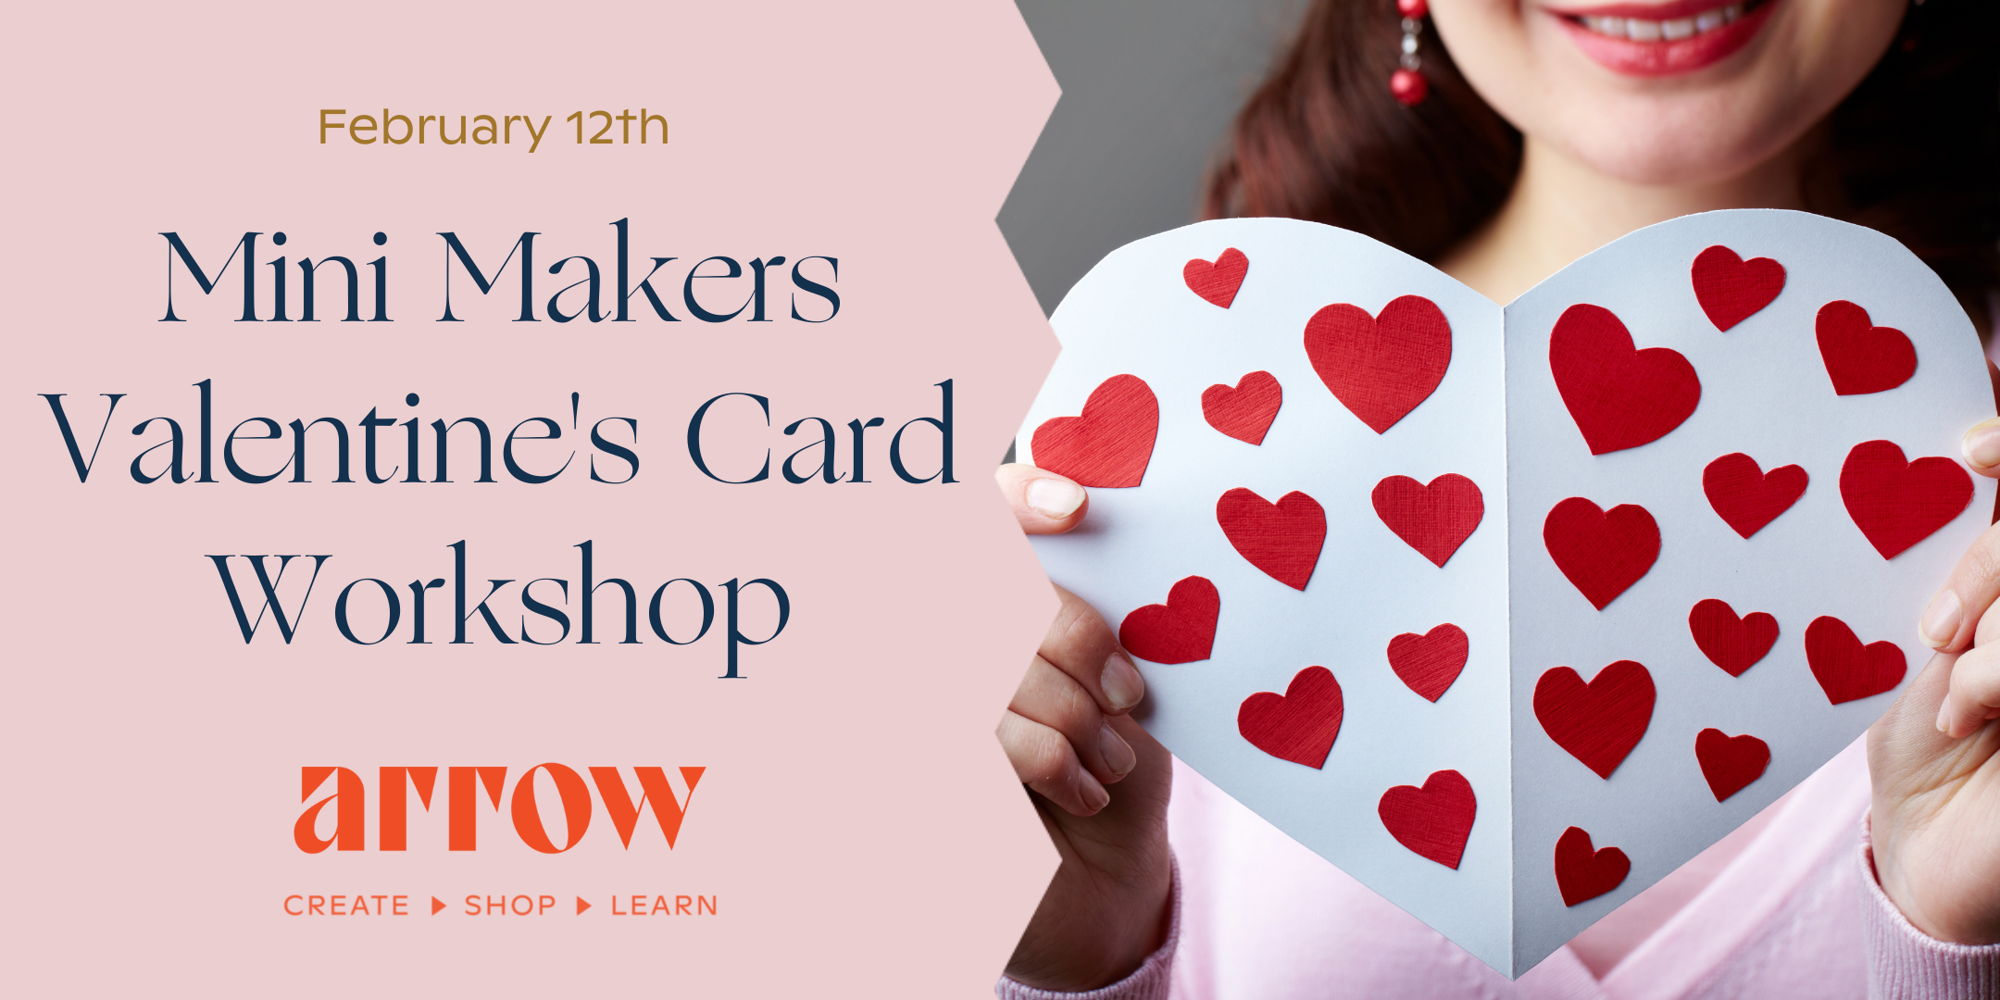 Valentine's Card Workshop with Amy Hartelust promotional image